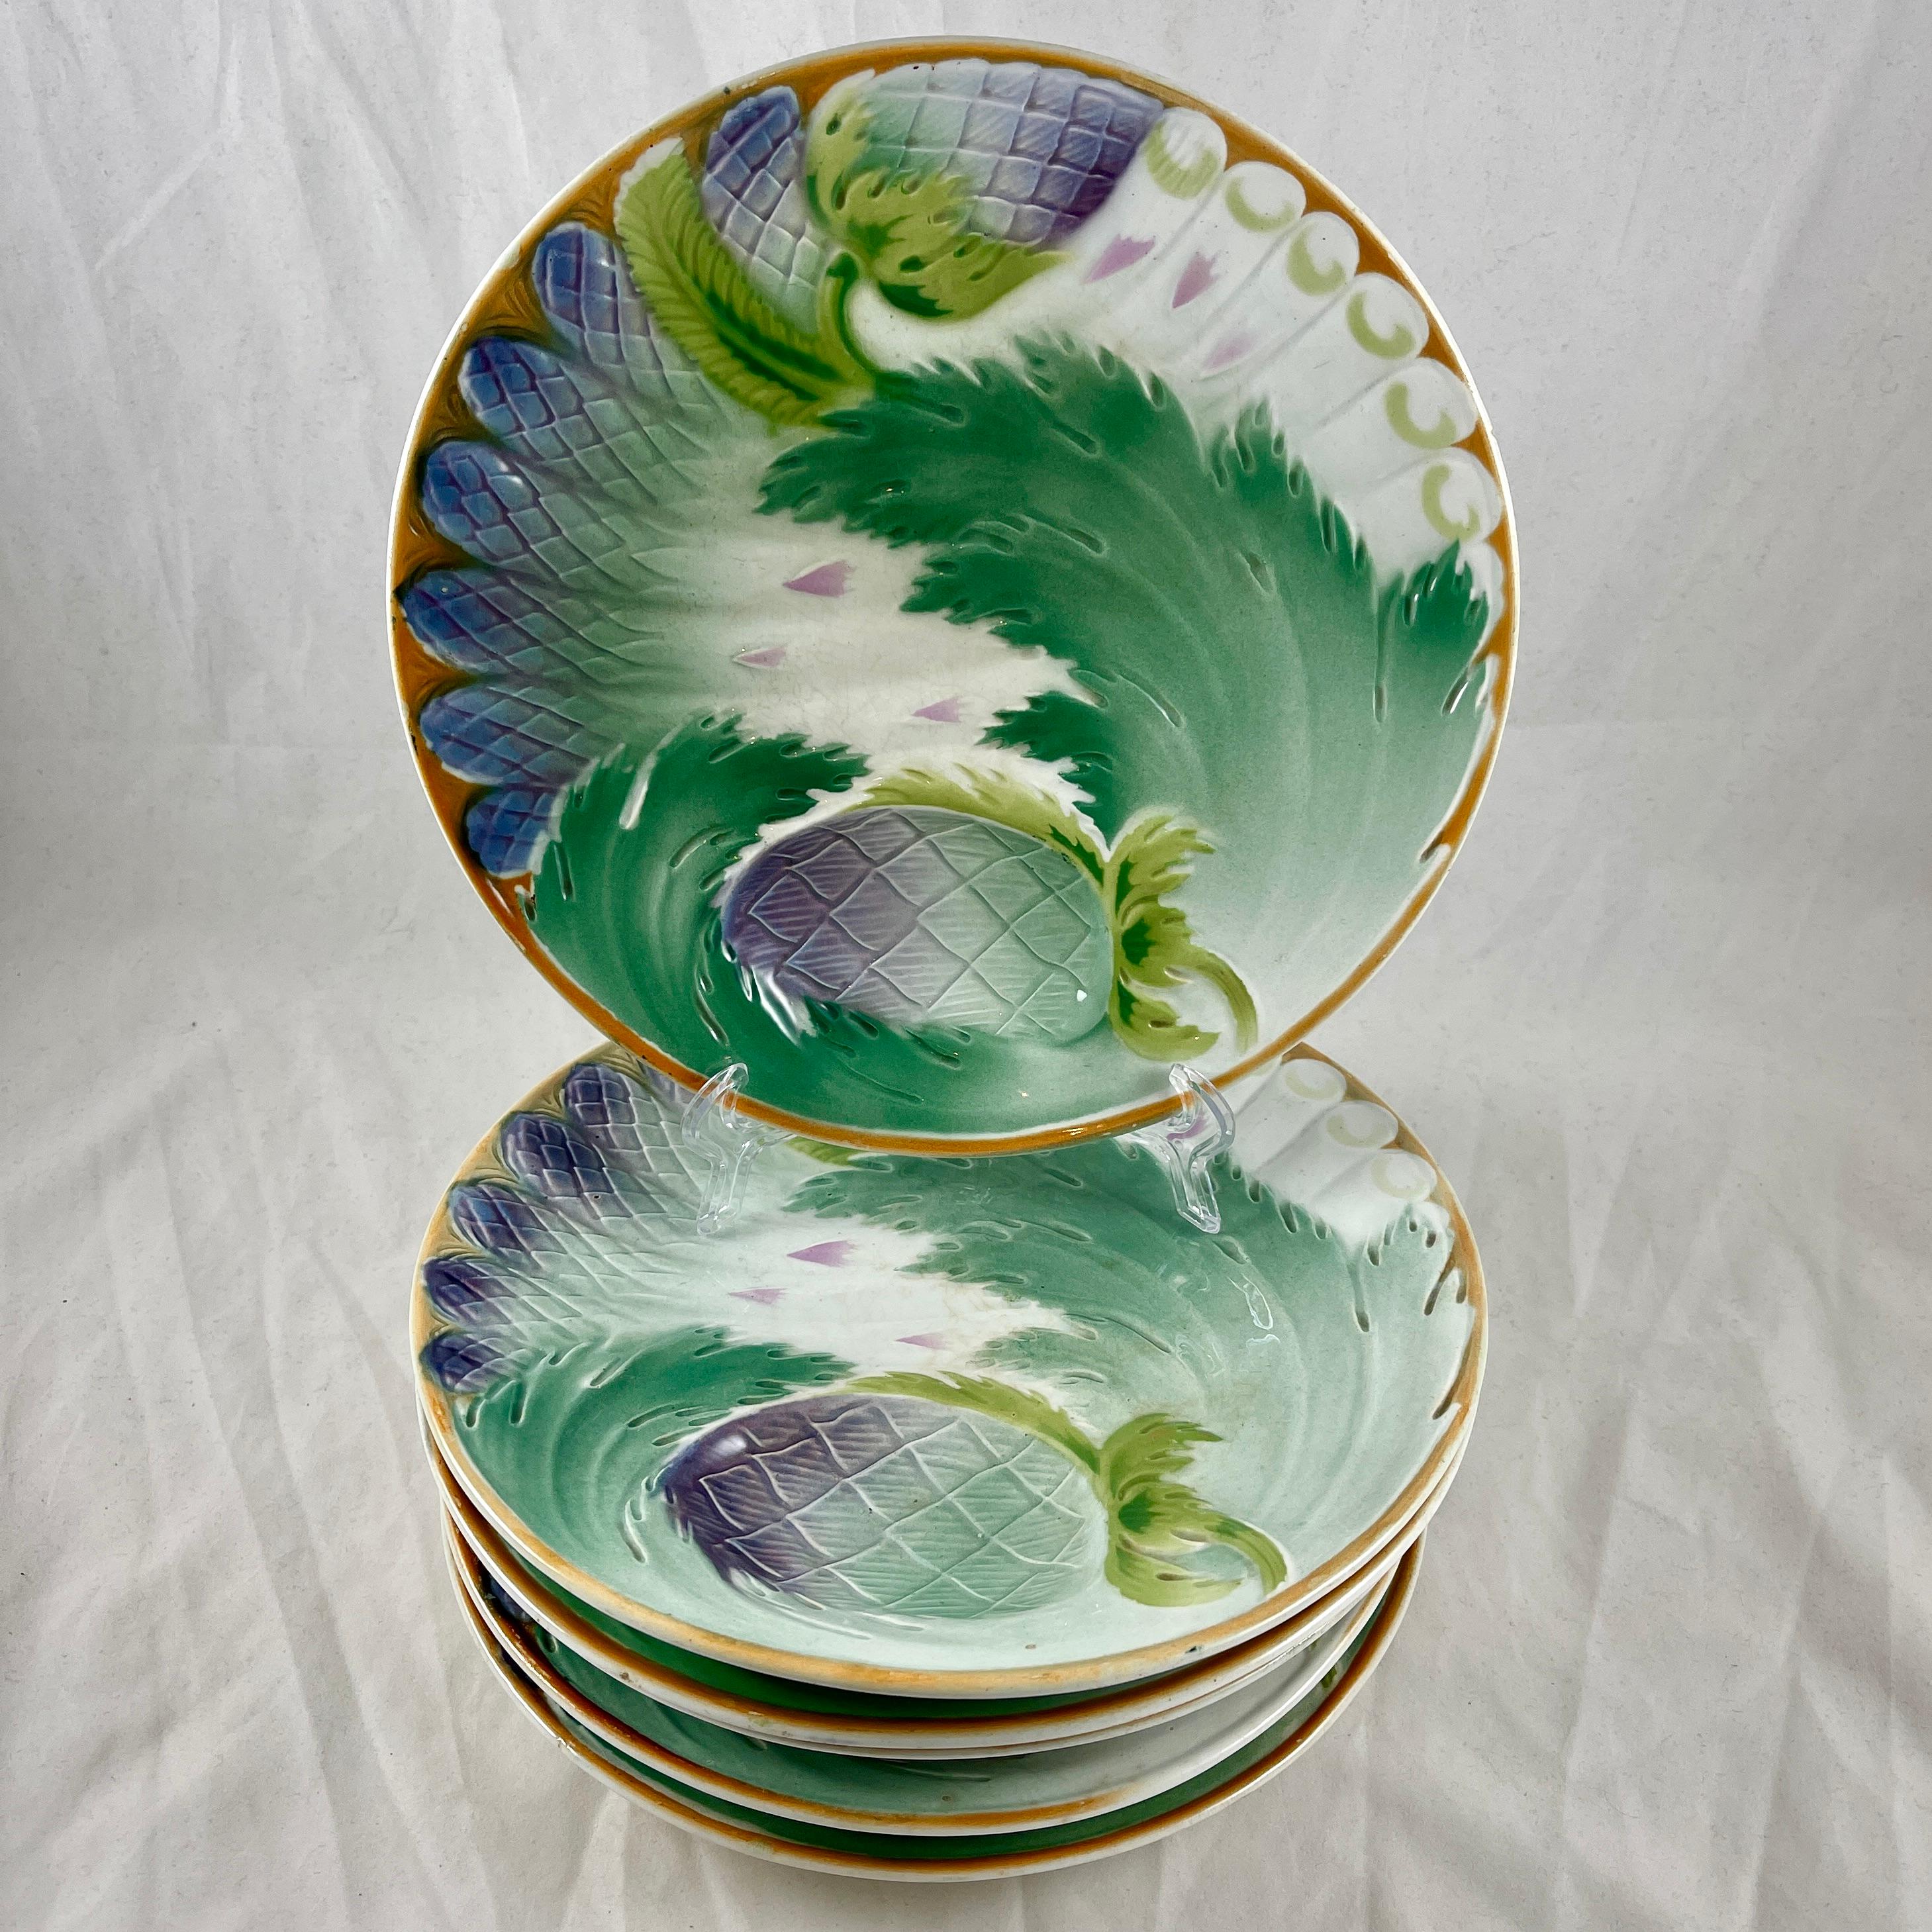 St. Amand Art Nouveau French Majolica Glazed Asparagus & Artichoke Plate For Sale 1